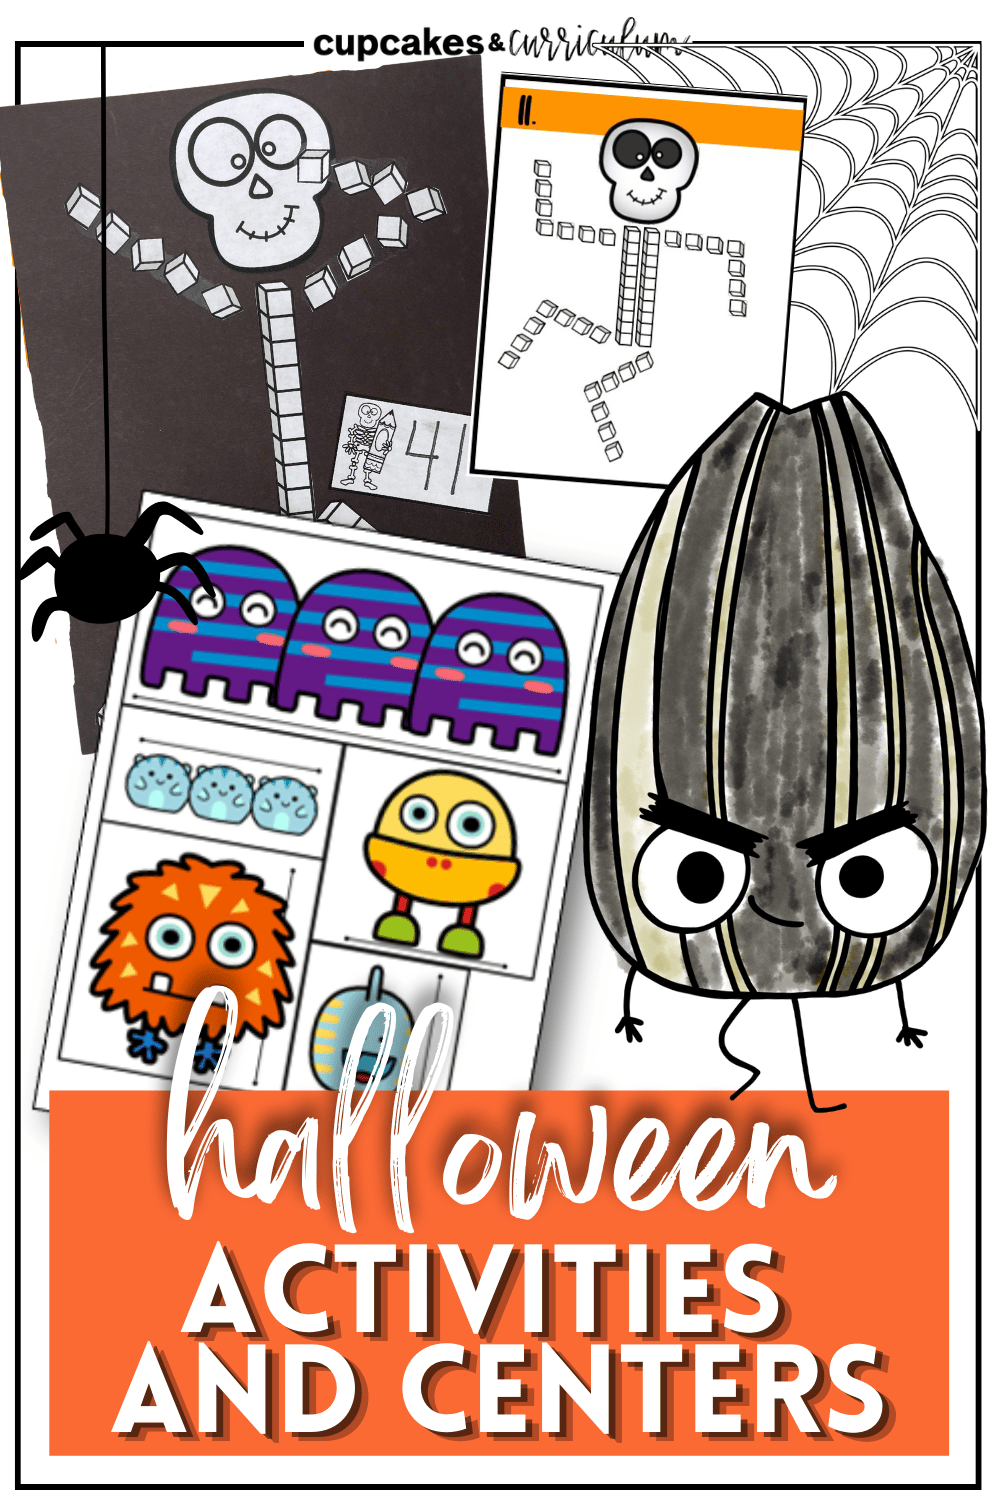 Halloween Activities & Centers for the Classroom